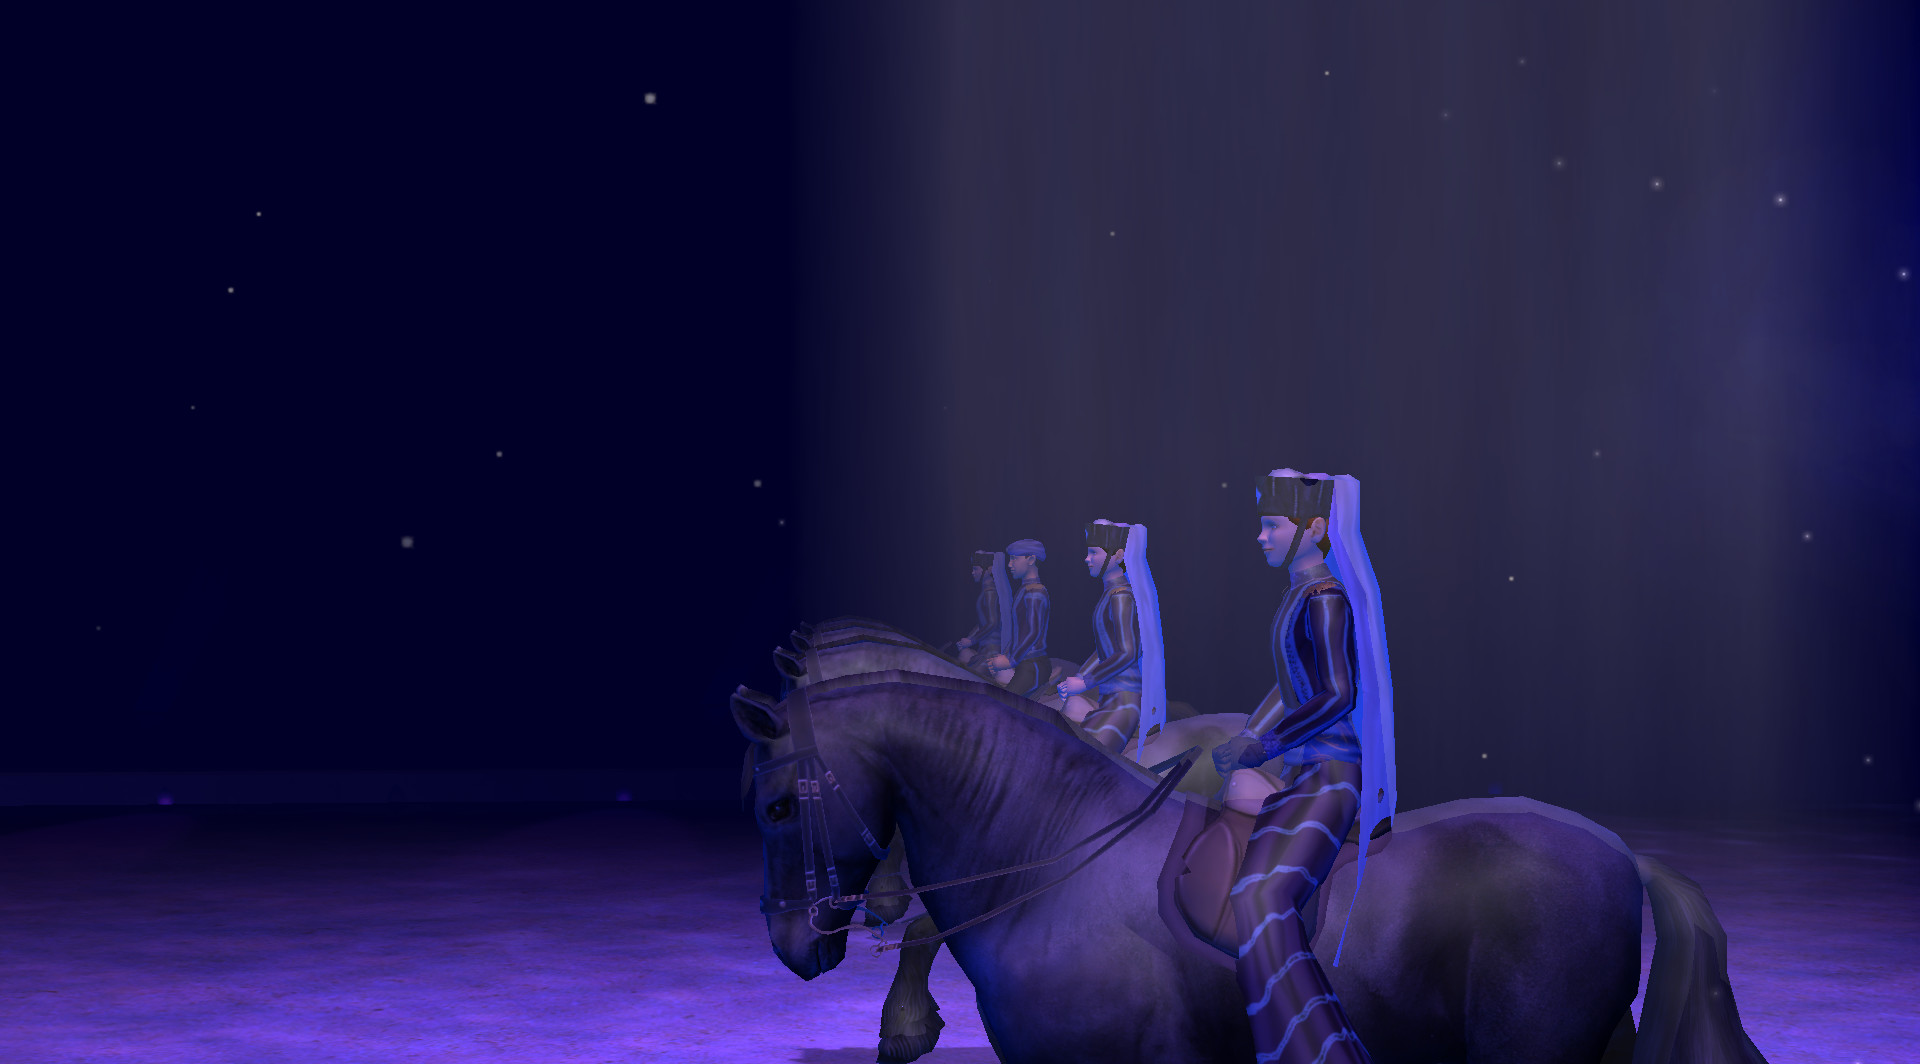 EquiMagic - Galashow of Horses screenshot